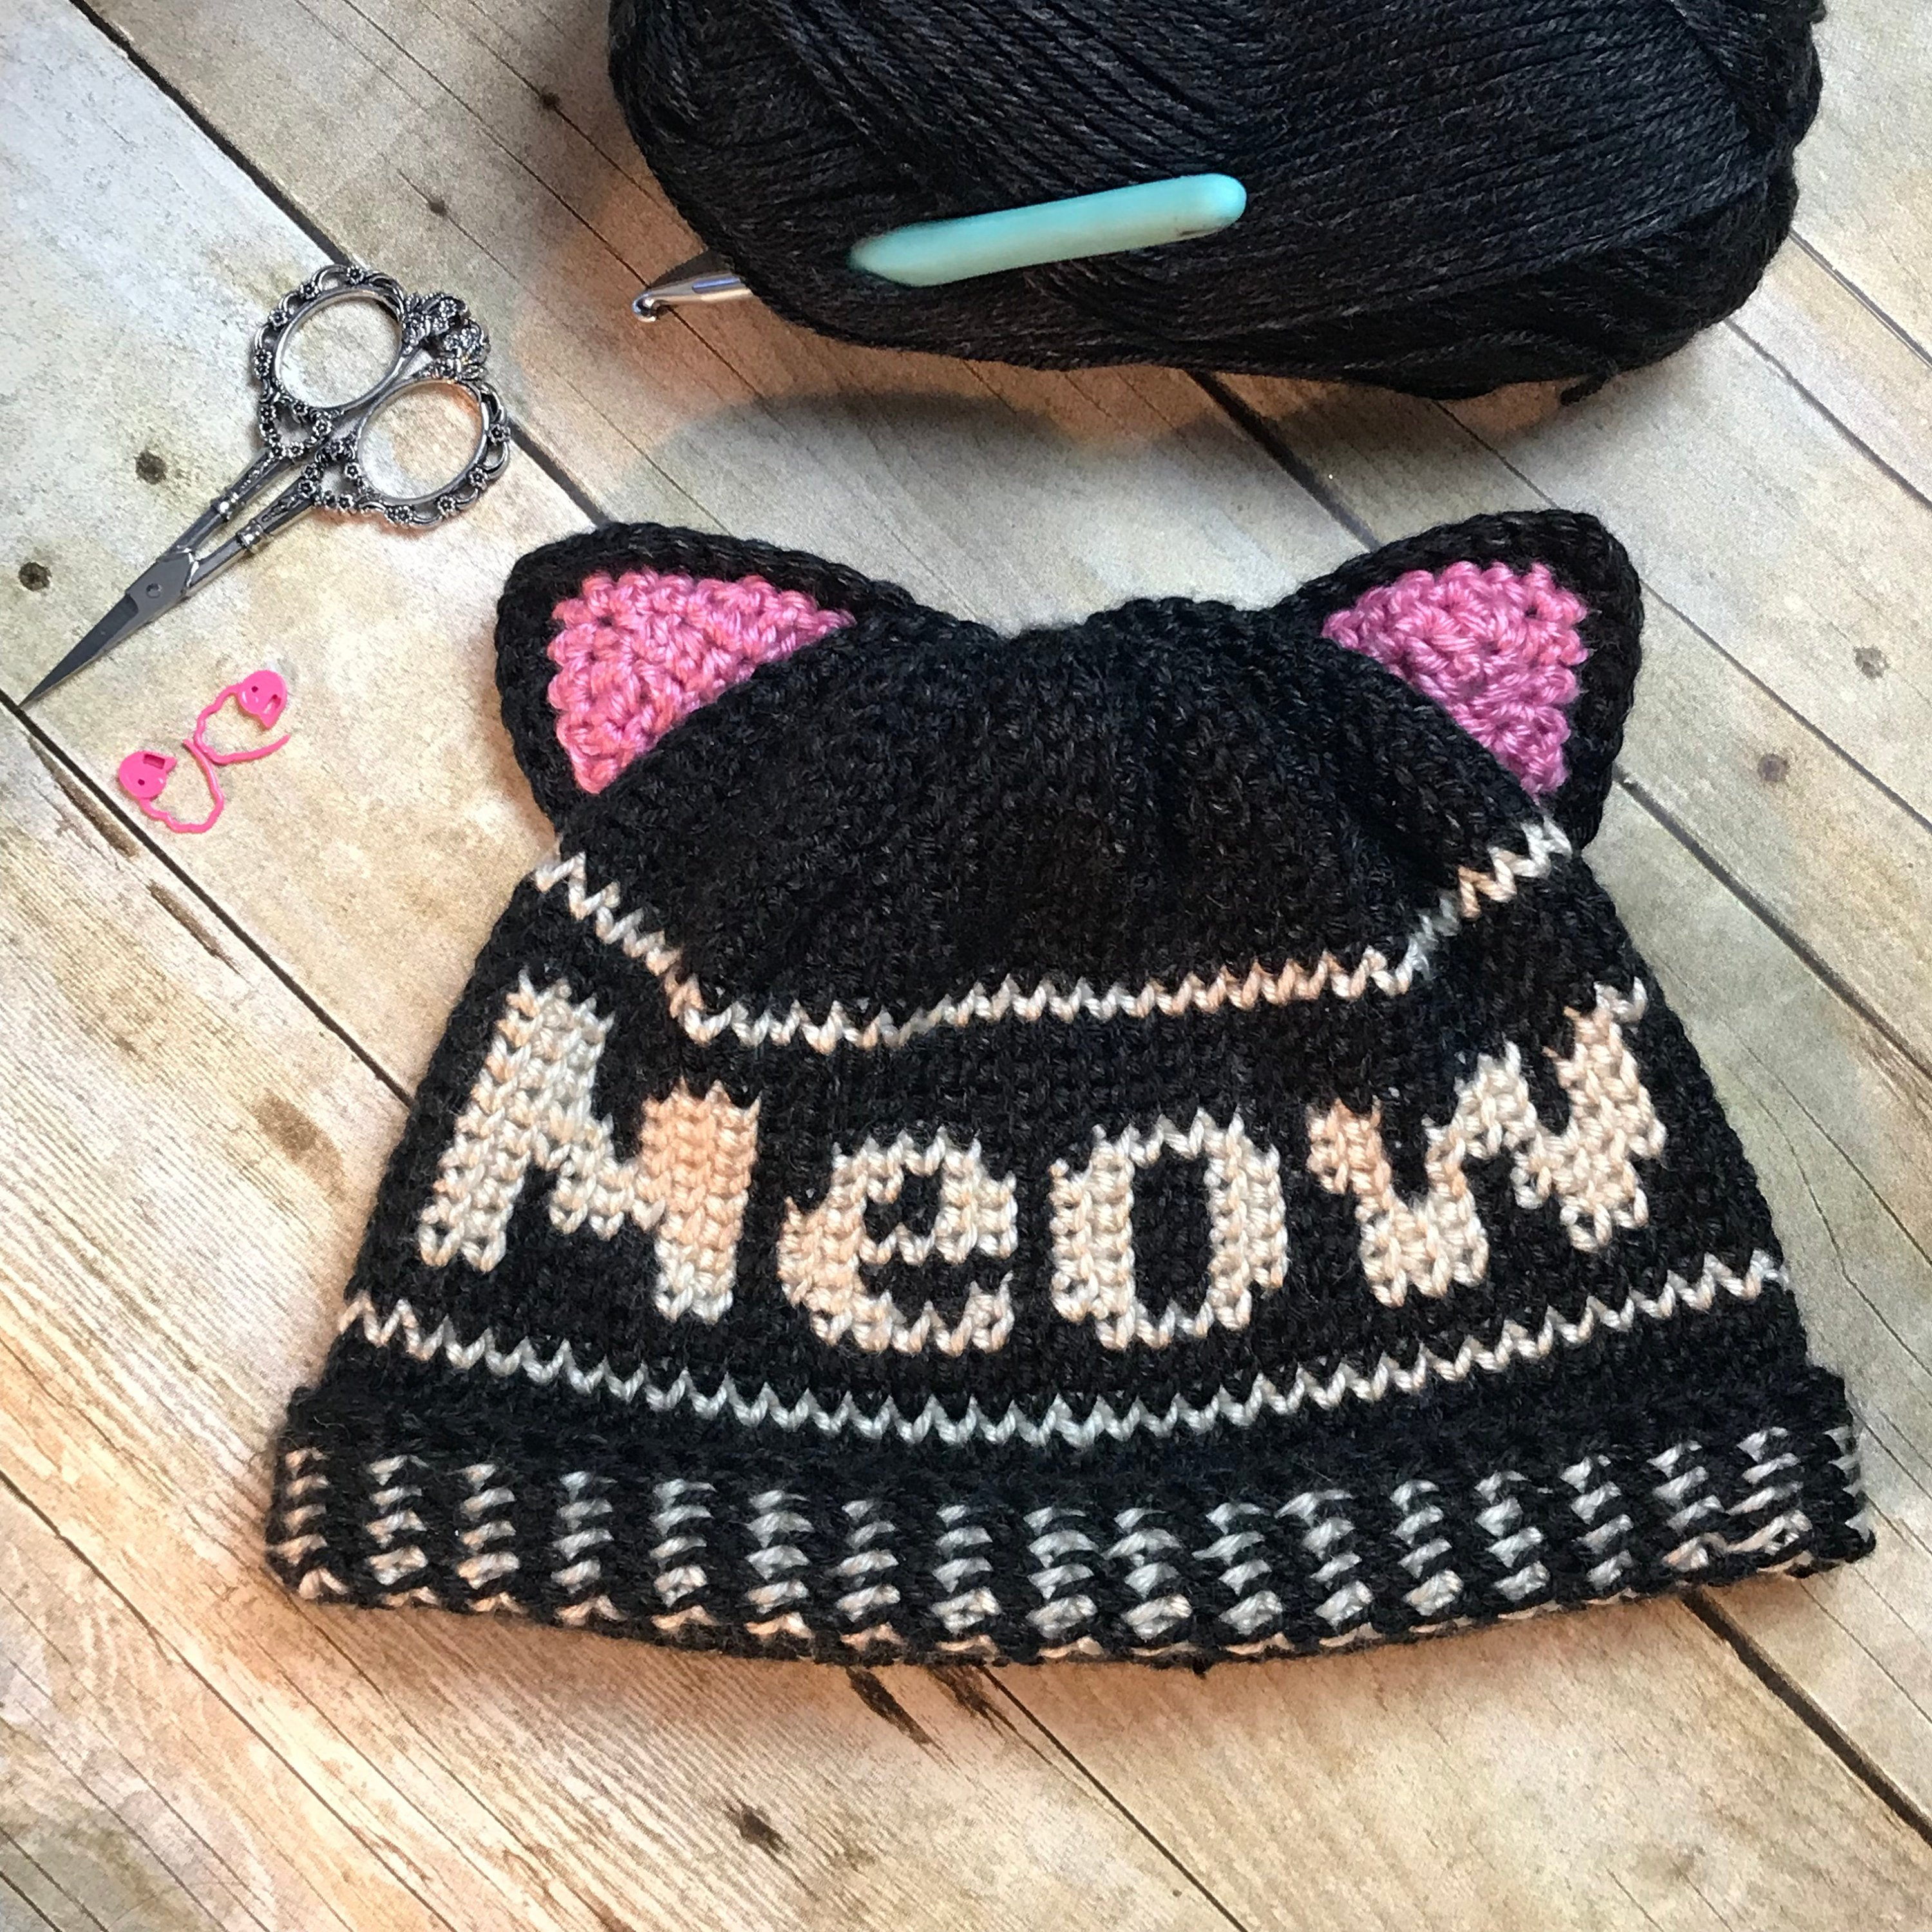 How To Follow A Crochet Pattern Meow Beanie Crochet Beanie Crochet Pattern Video Etsy